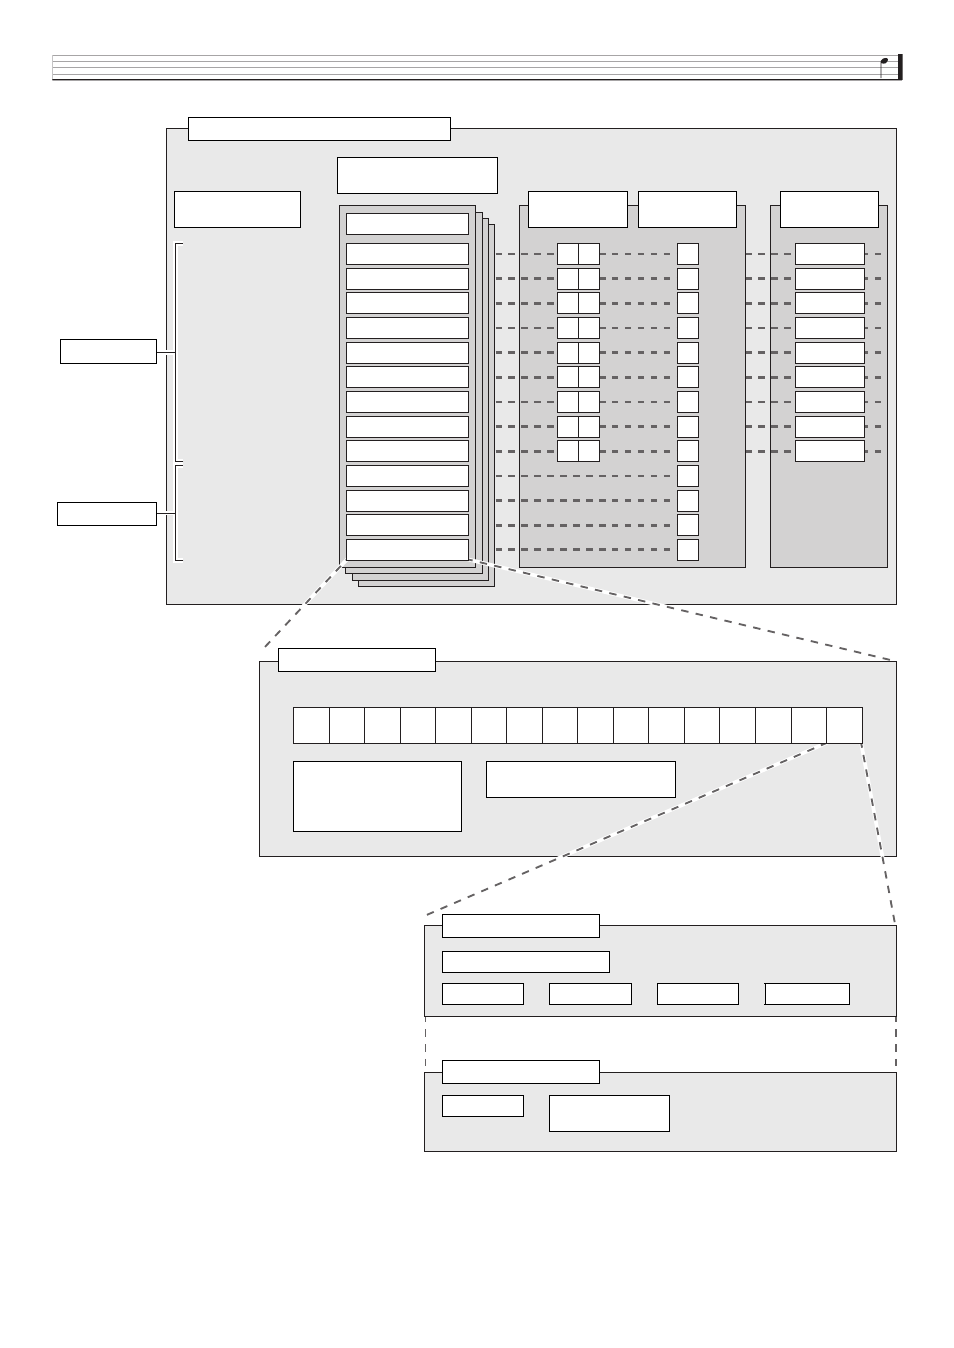 E-51 | Casio XW-G1 User Manual | Page 53 / 108